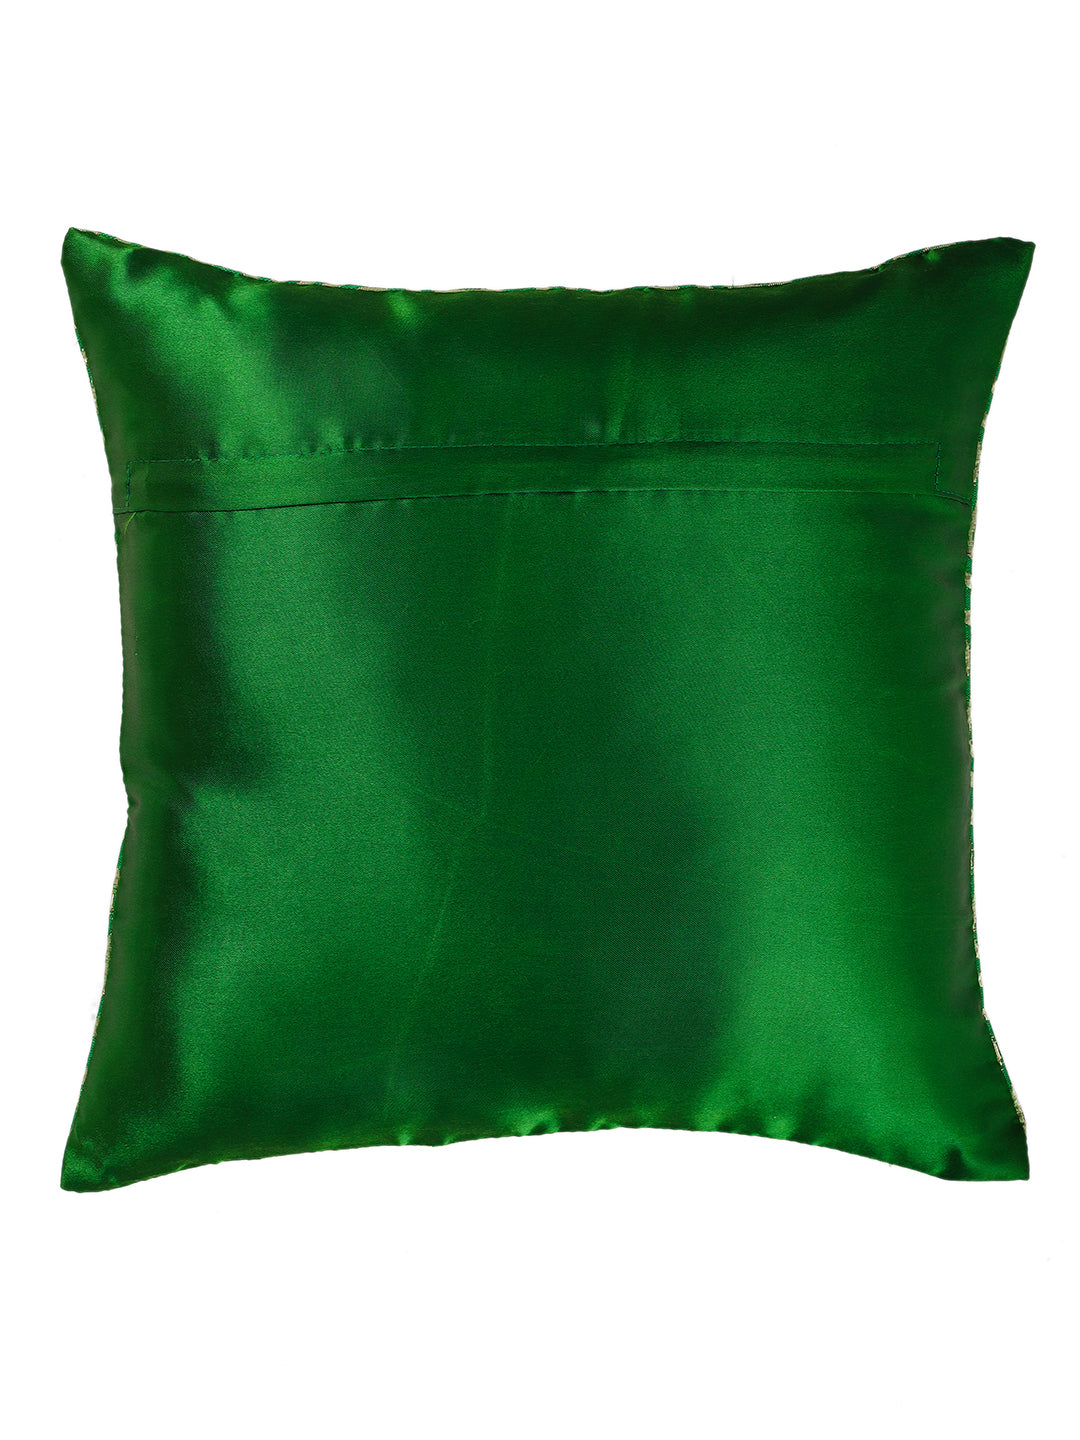 Silkfab Set 0f 5 Decorative Silk Cushion Covers (16x16) Boota Green - SILKFAB